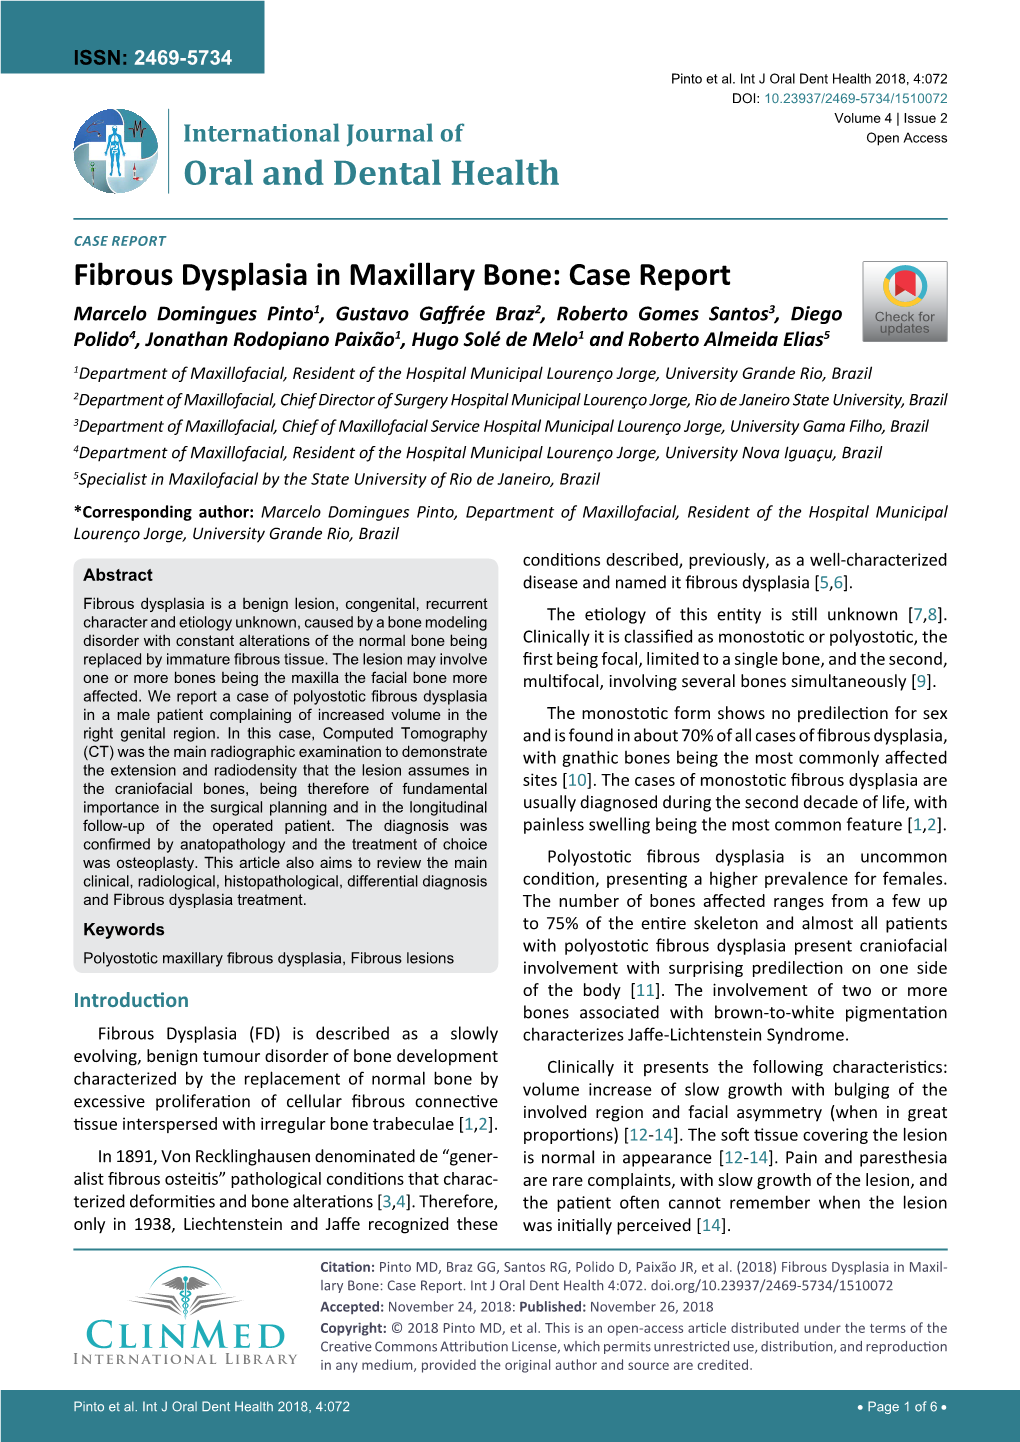 Fibrous Dysplasia in Maxillary Bone